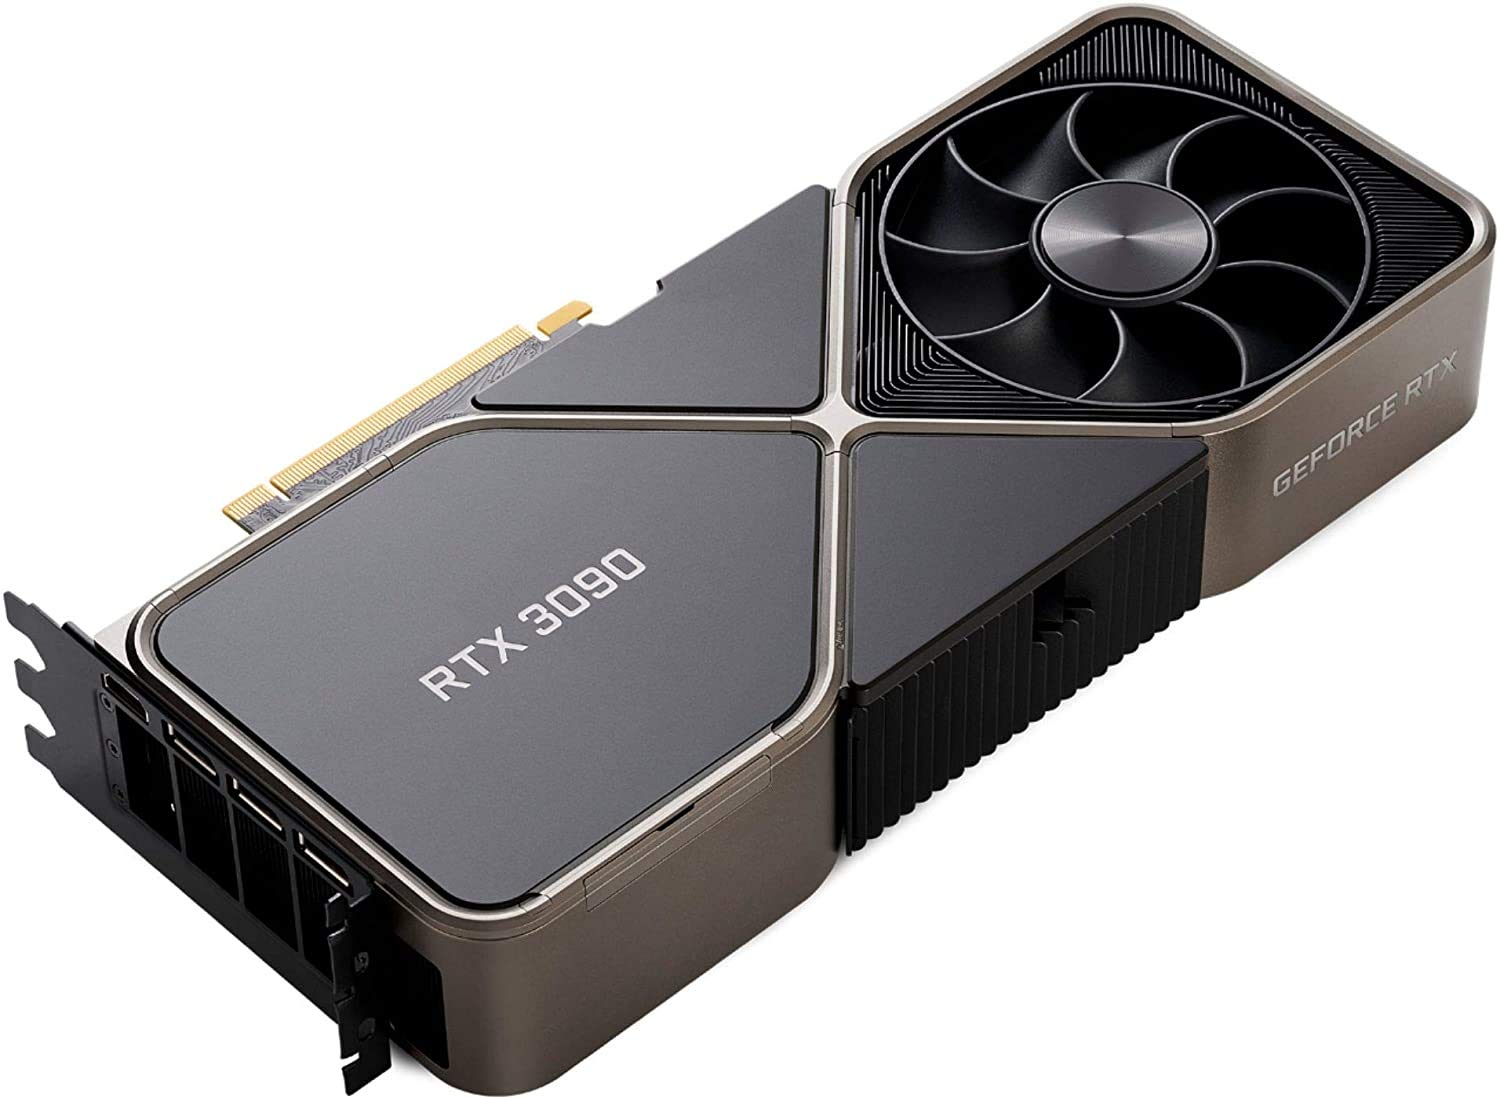 5. Nvidia GeForce RTX 3090